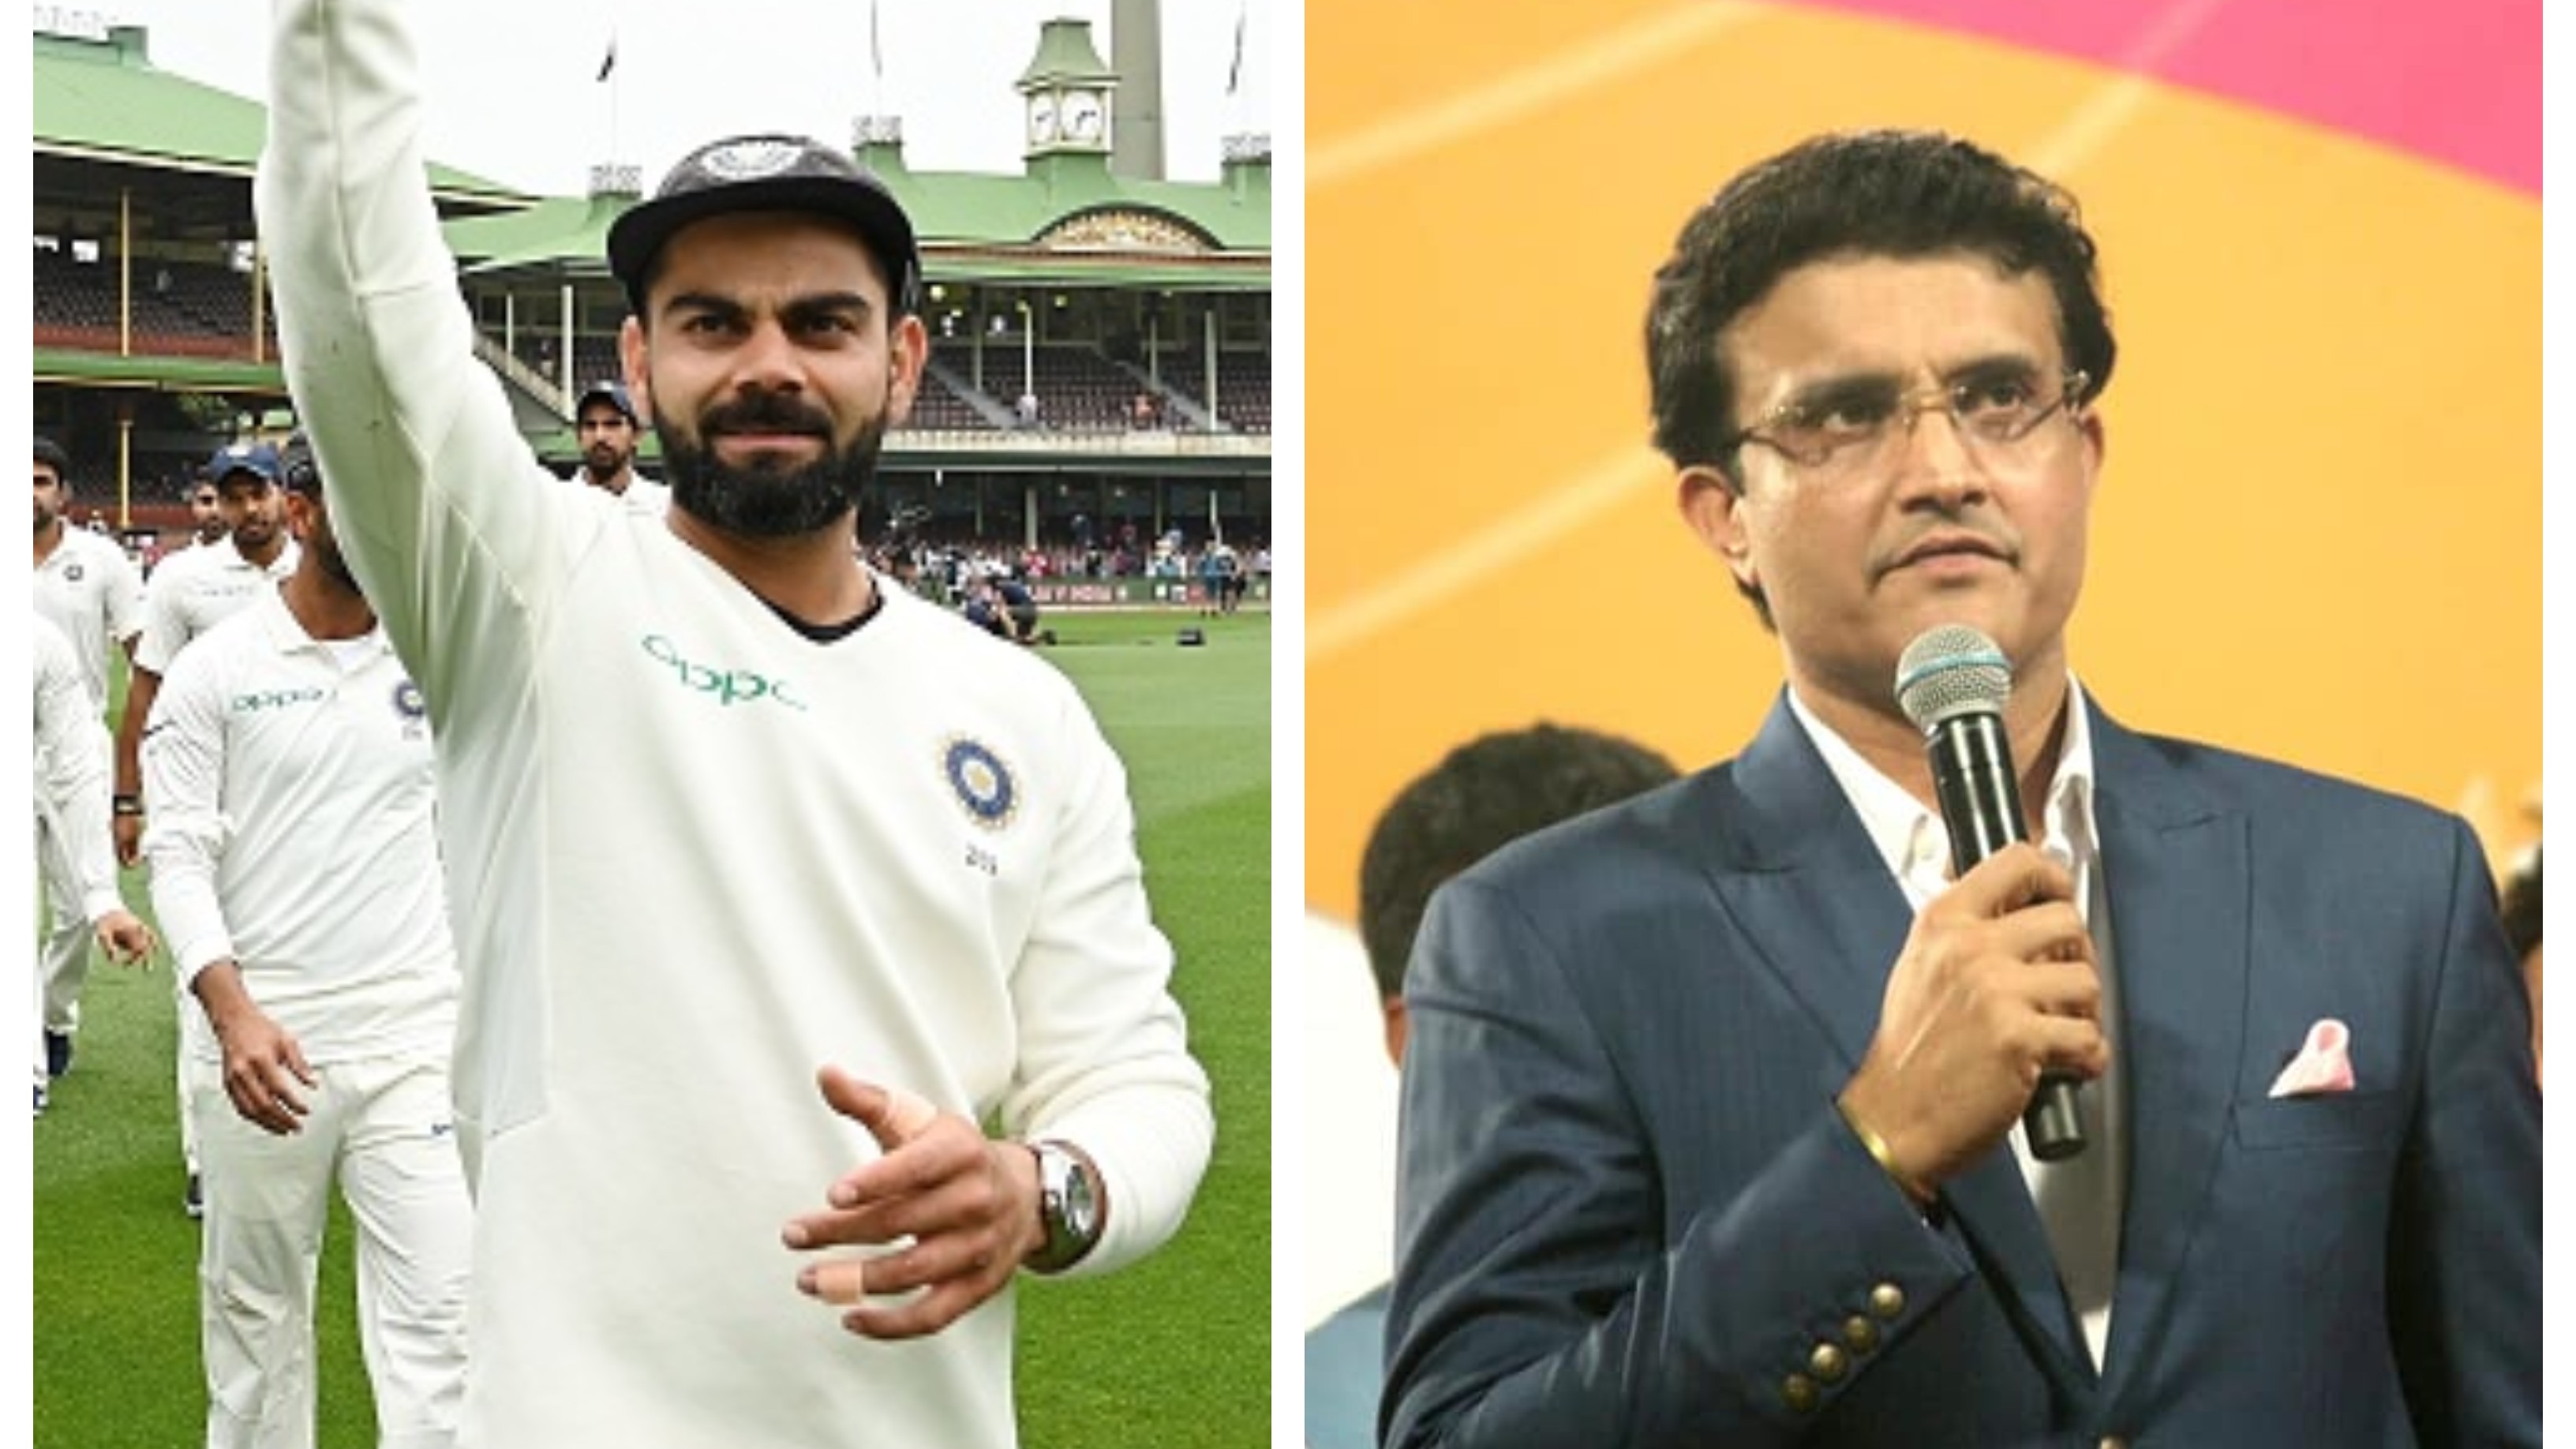 AUS v IND 2020-21: India's Test series fortunes dependent on Kohli's captaincy - Ganguly 